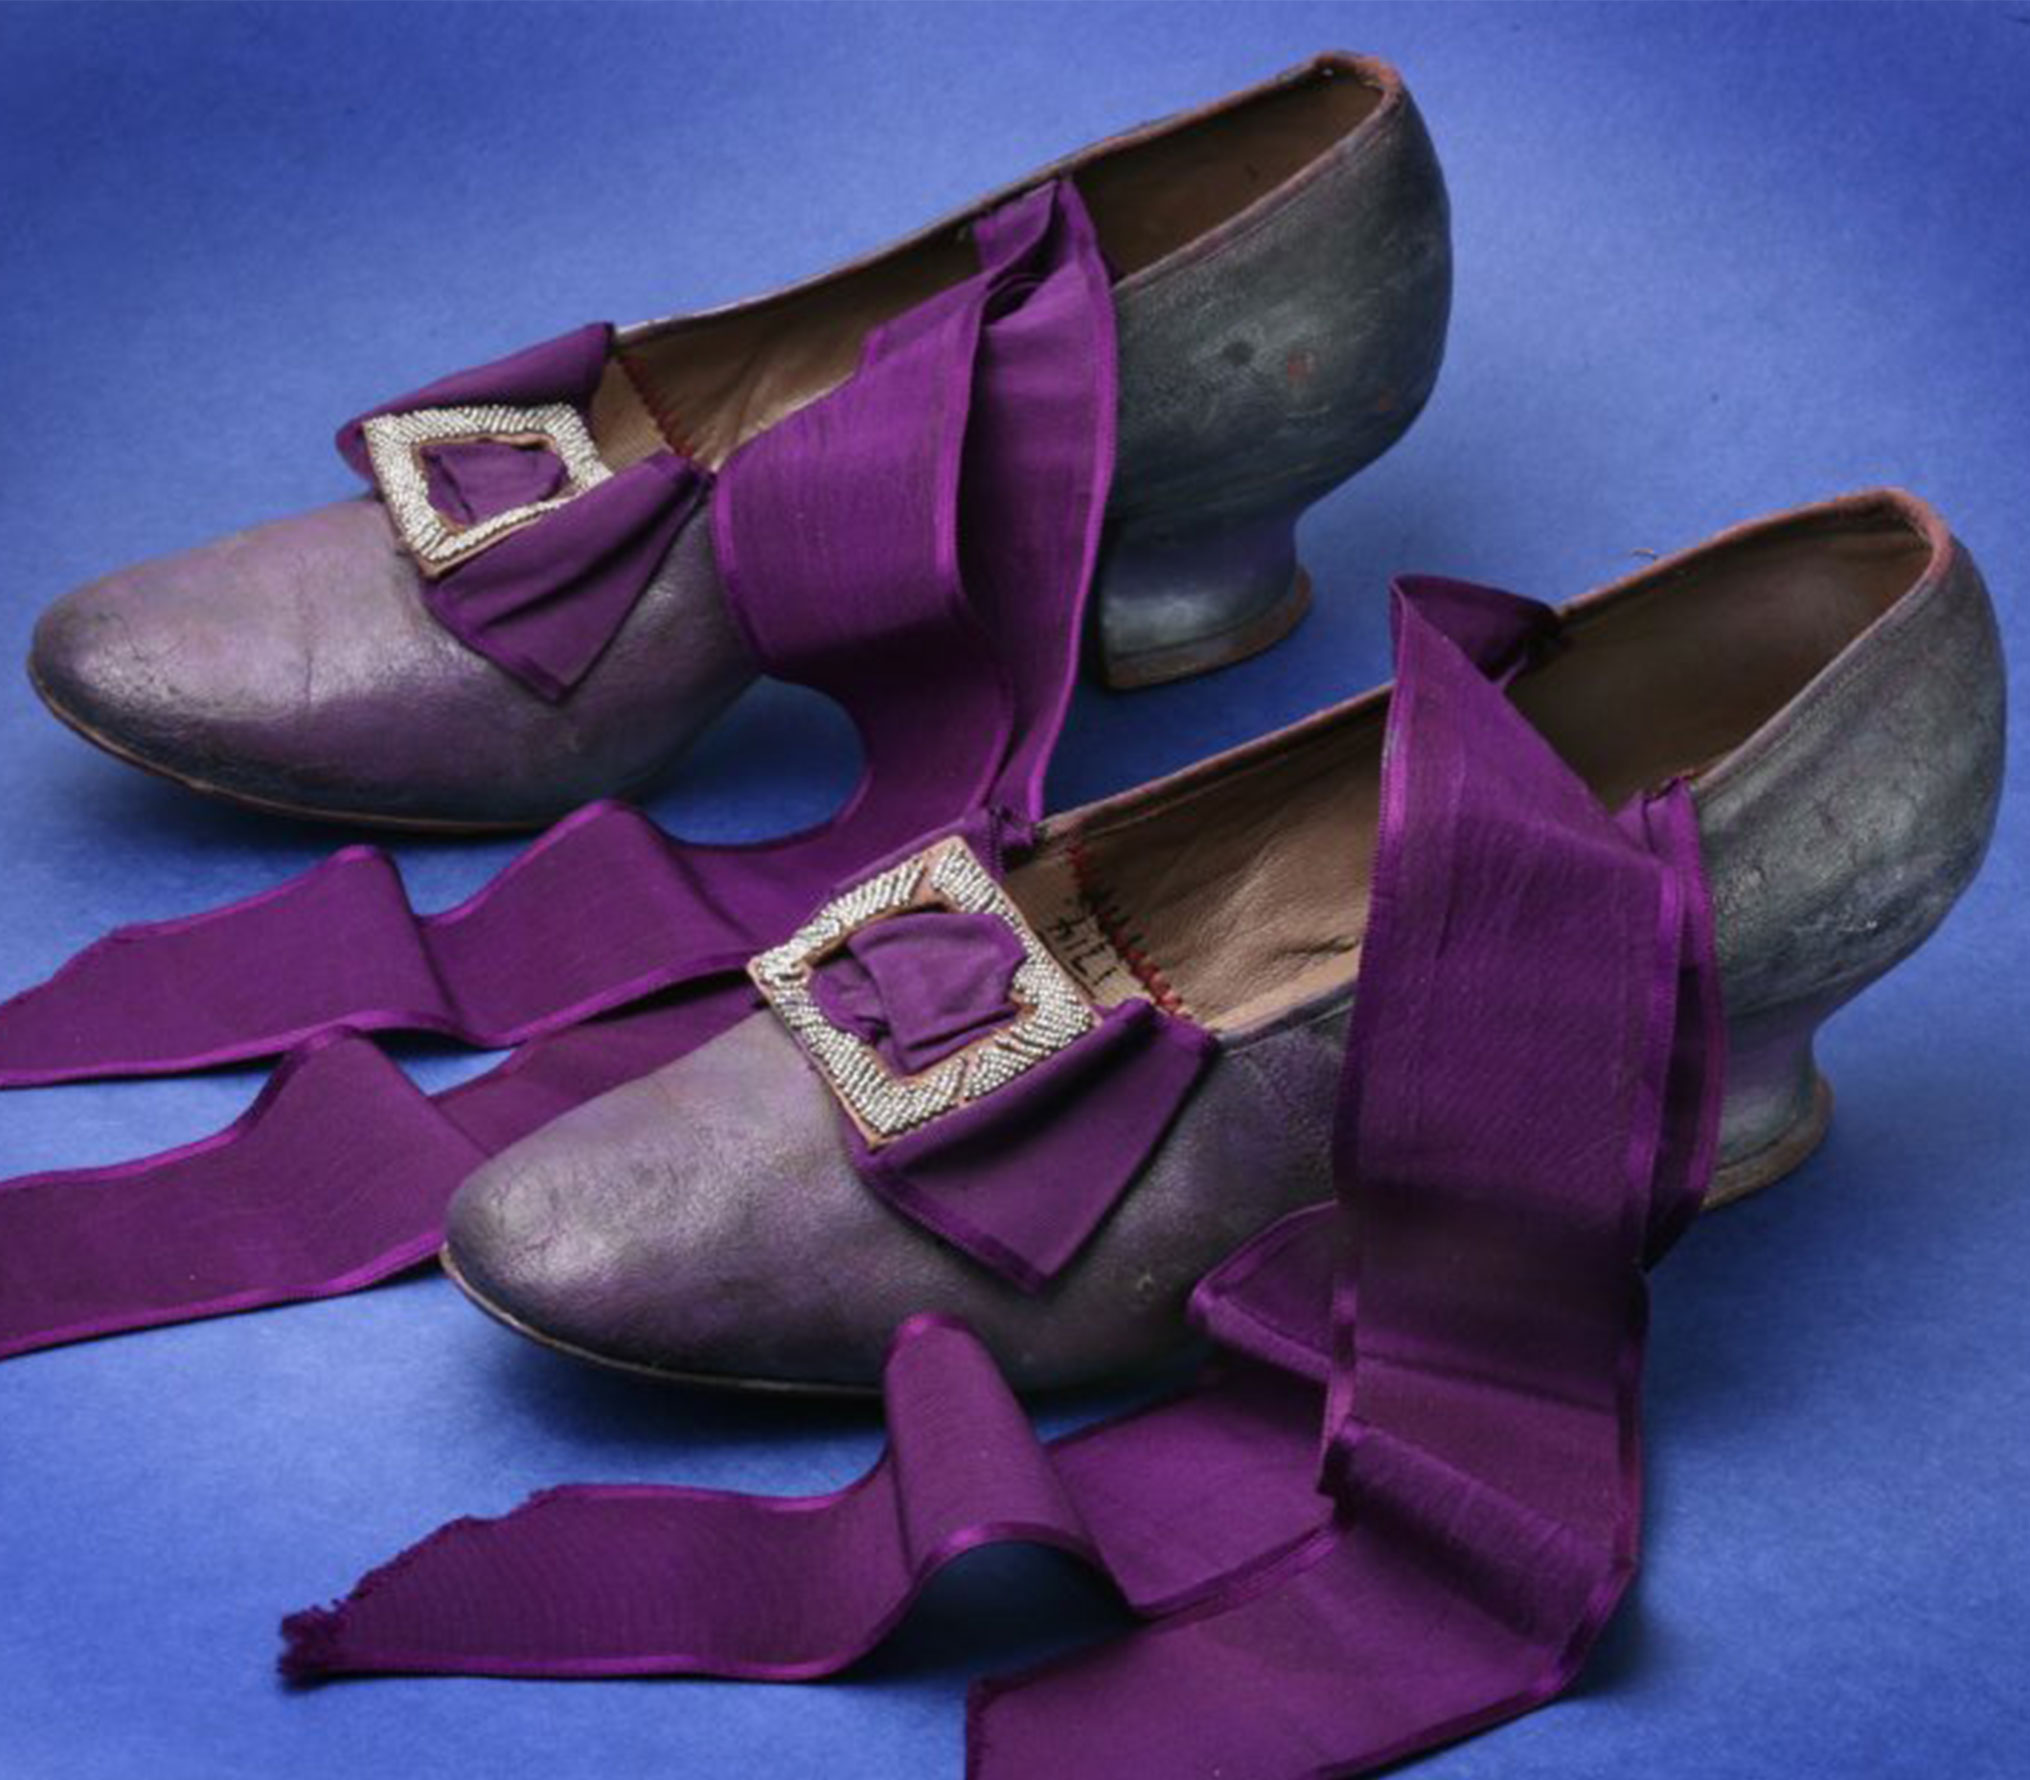 Purple shoes worn by Jessie Jack Hooper